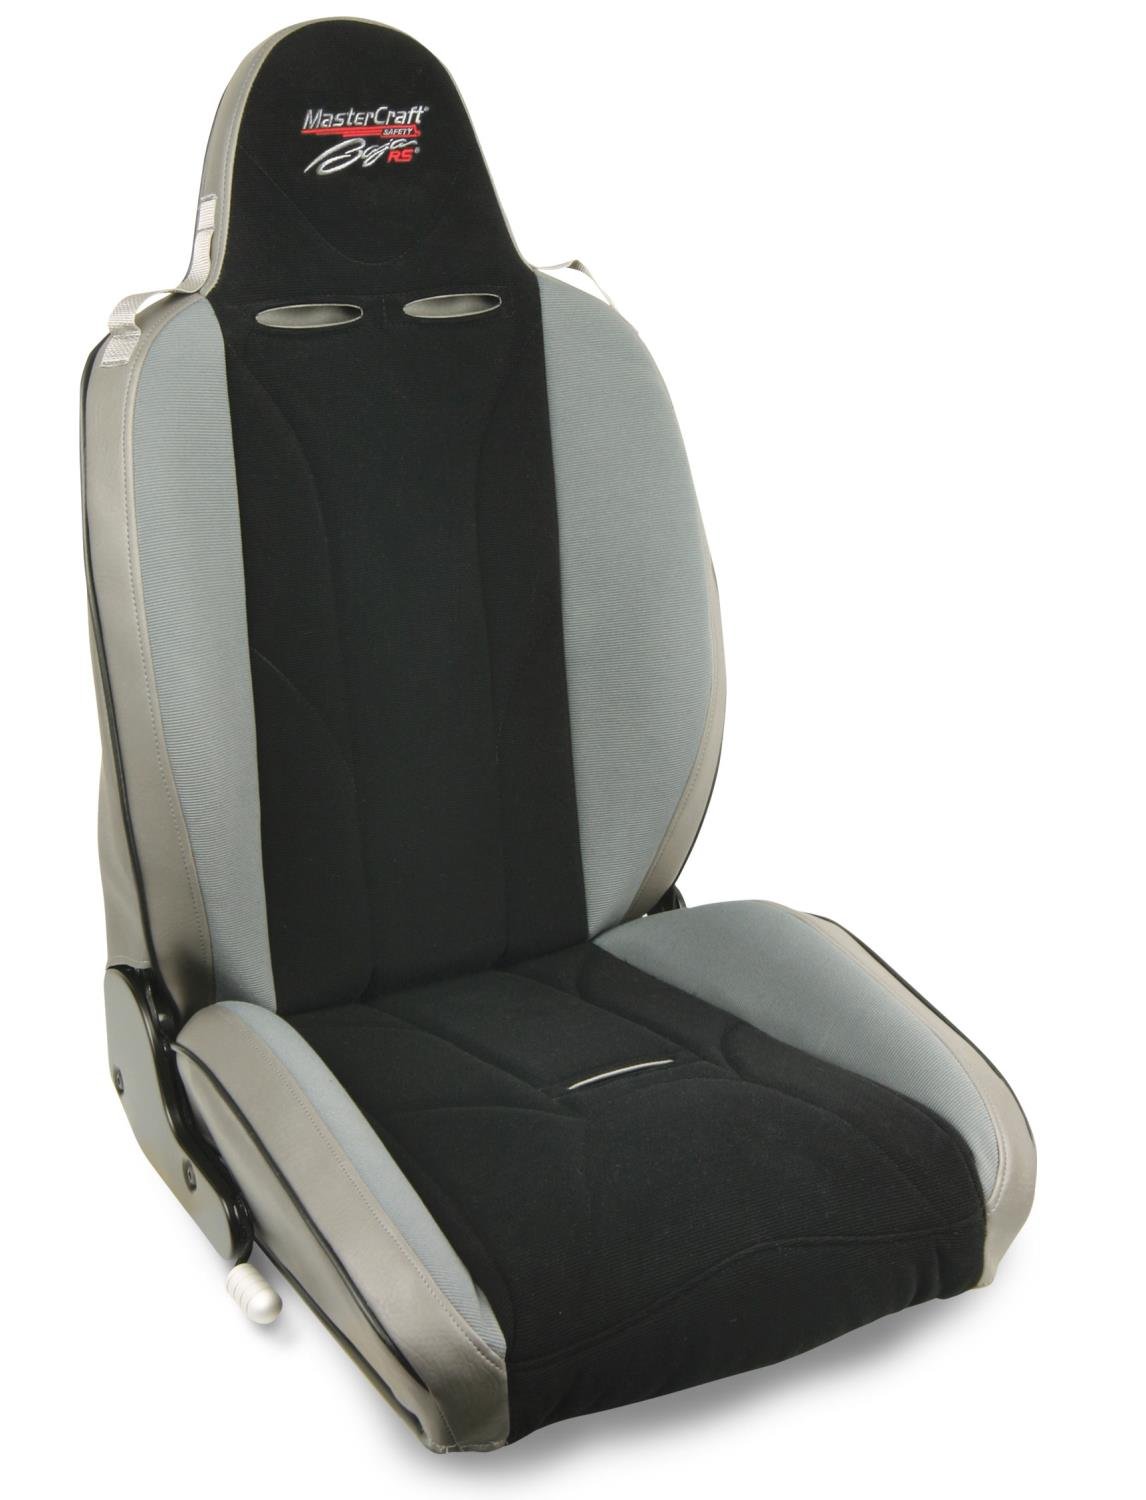 506027 MasterCraft Baja RS w/Fixed Headrest, Smoke w/Black Center & Gray Side Panels, Recliner Lever Right, w/BRS Stitch Pattern